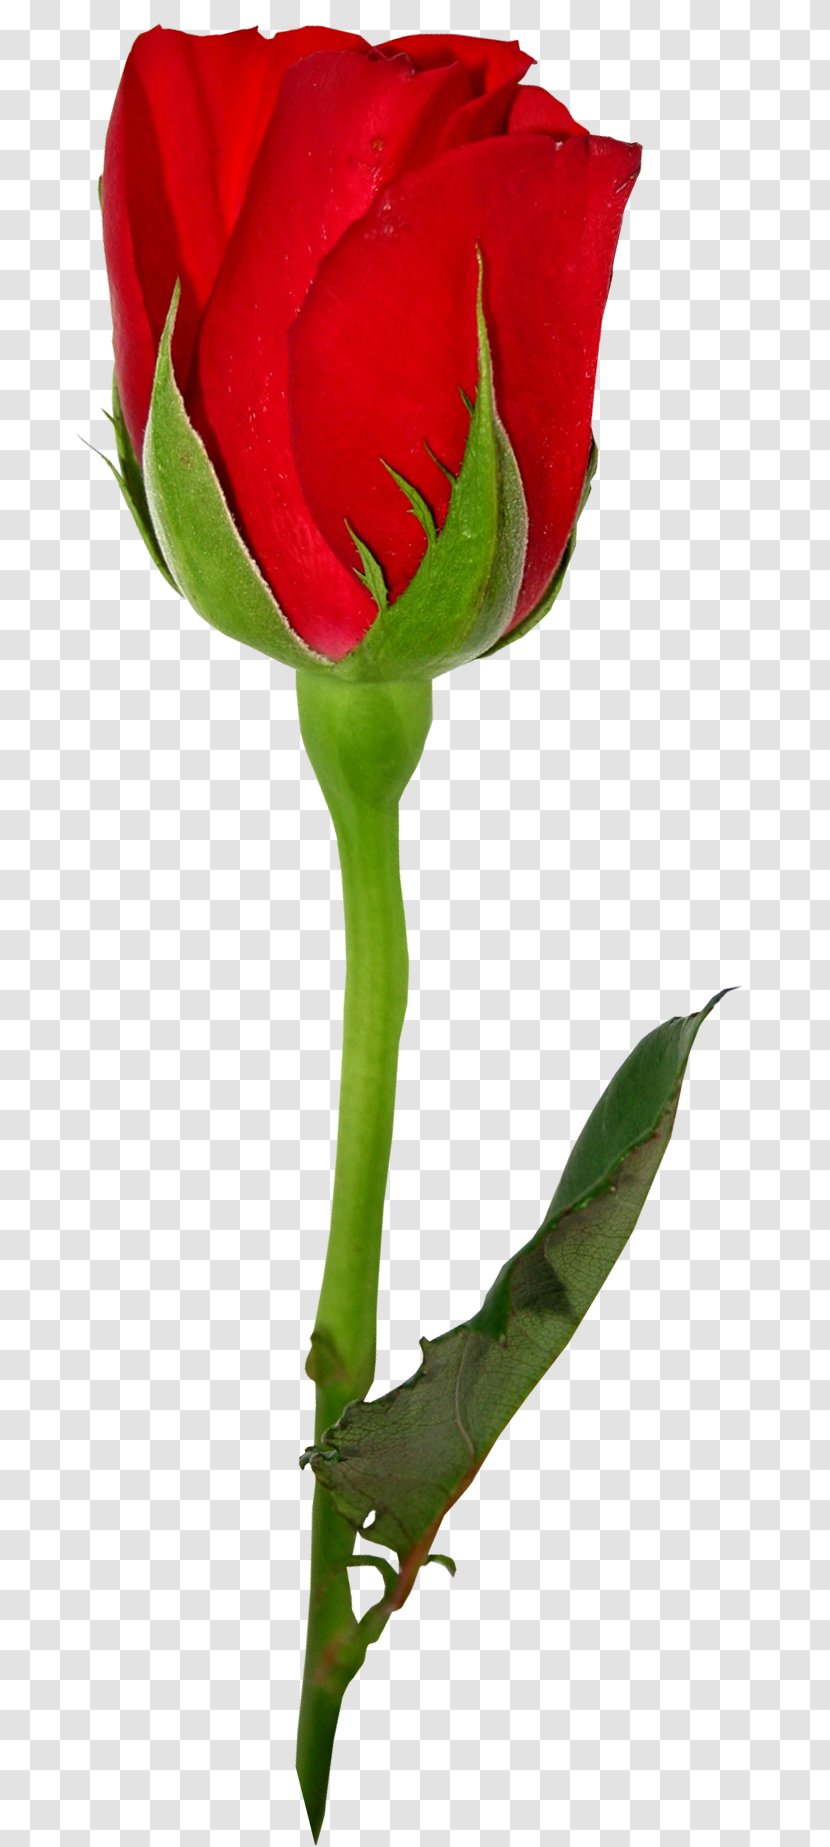 Garden Roses Centifolia Flower Rosa Brunonii - Cut Flowers - Red Rose Transparent PNG